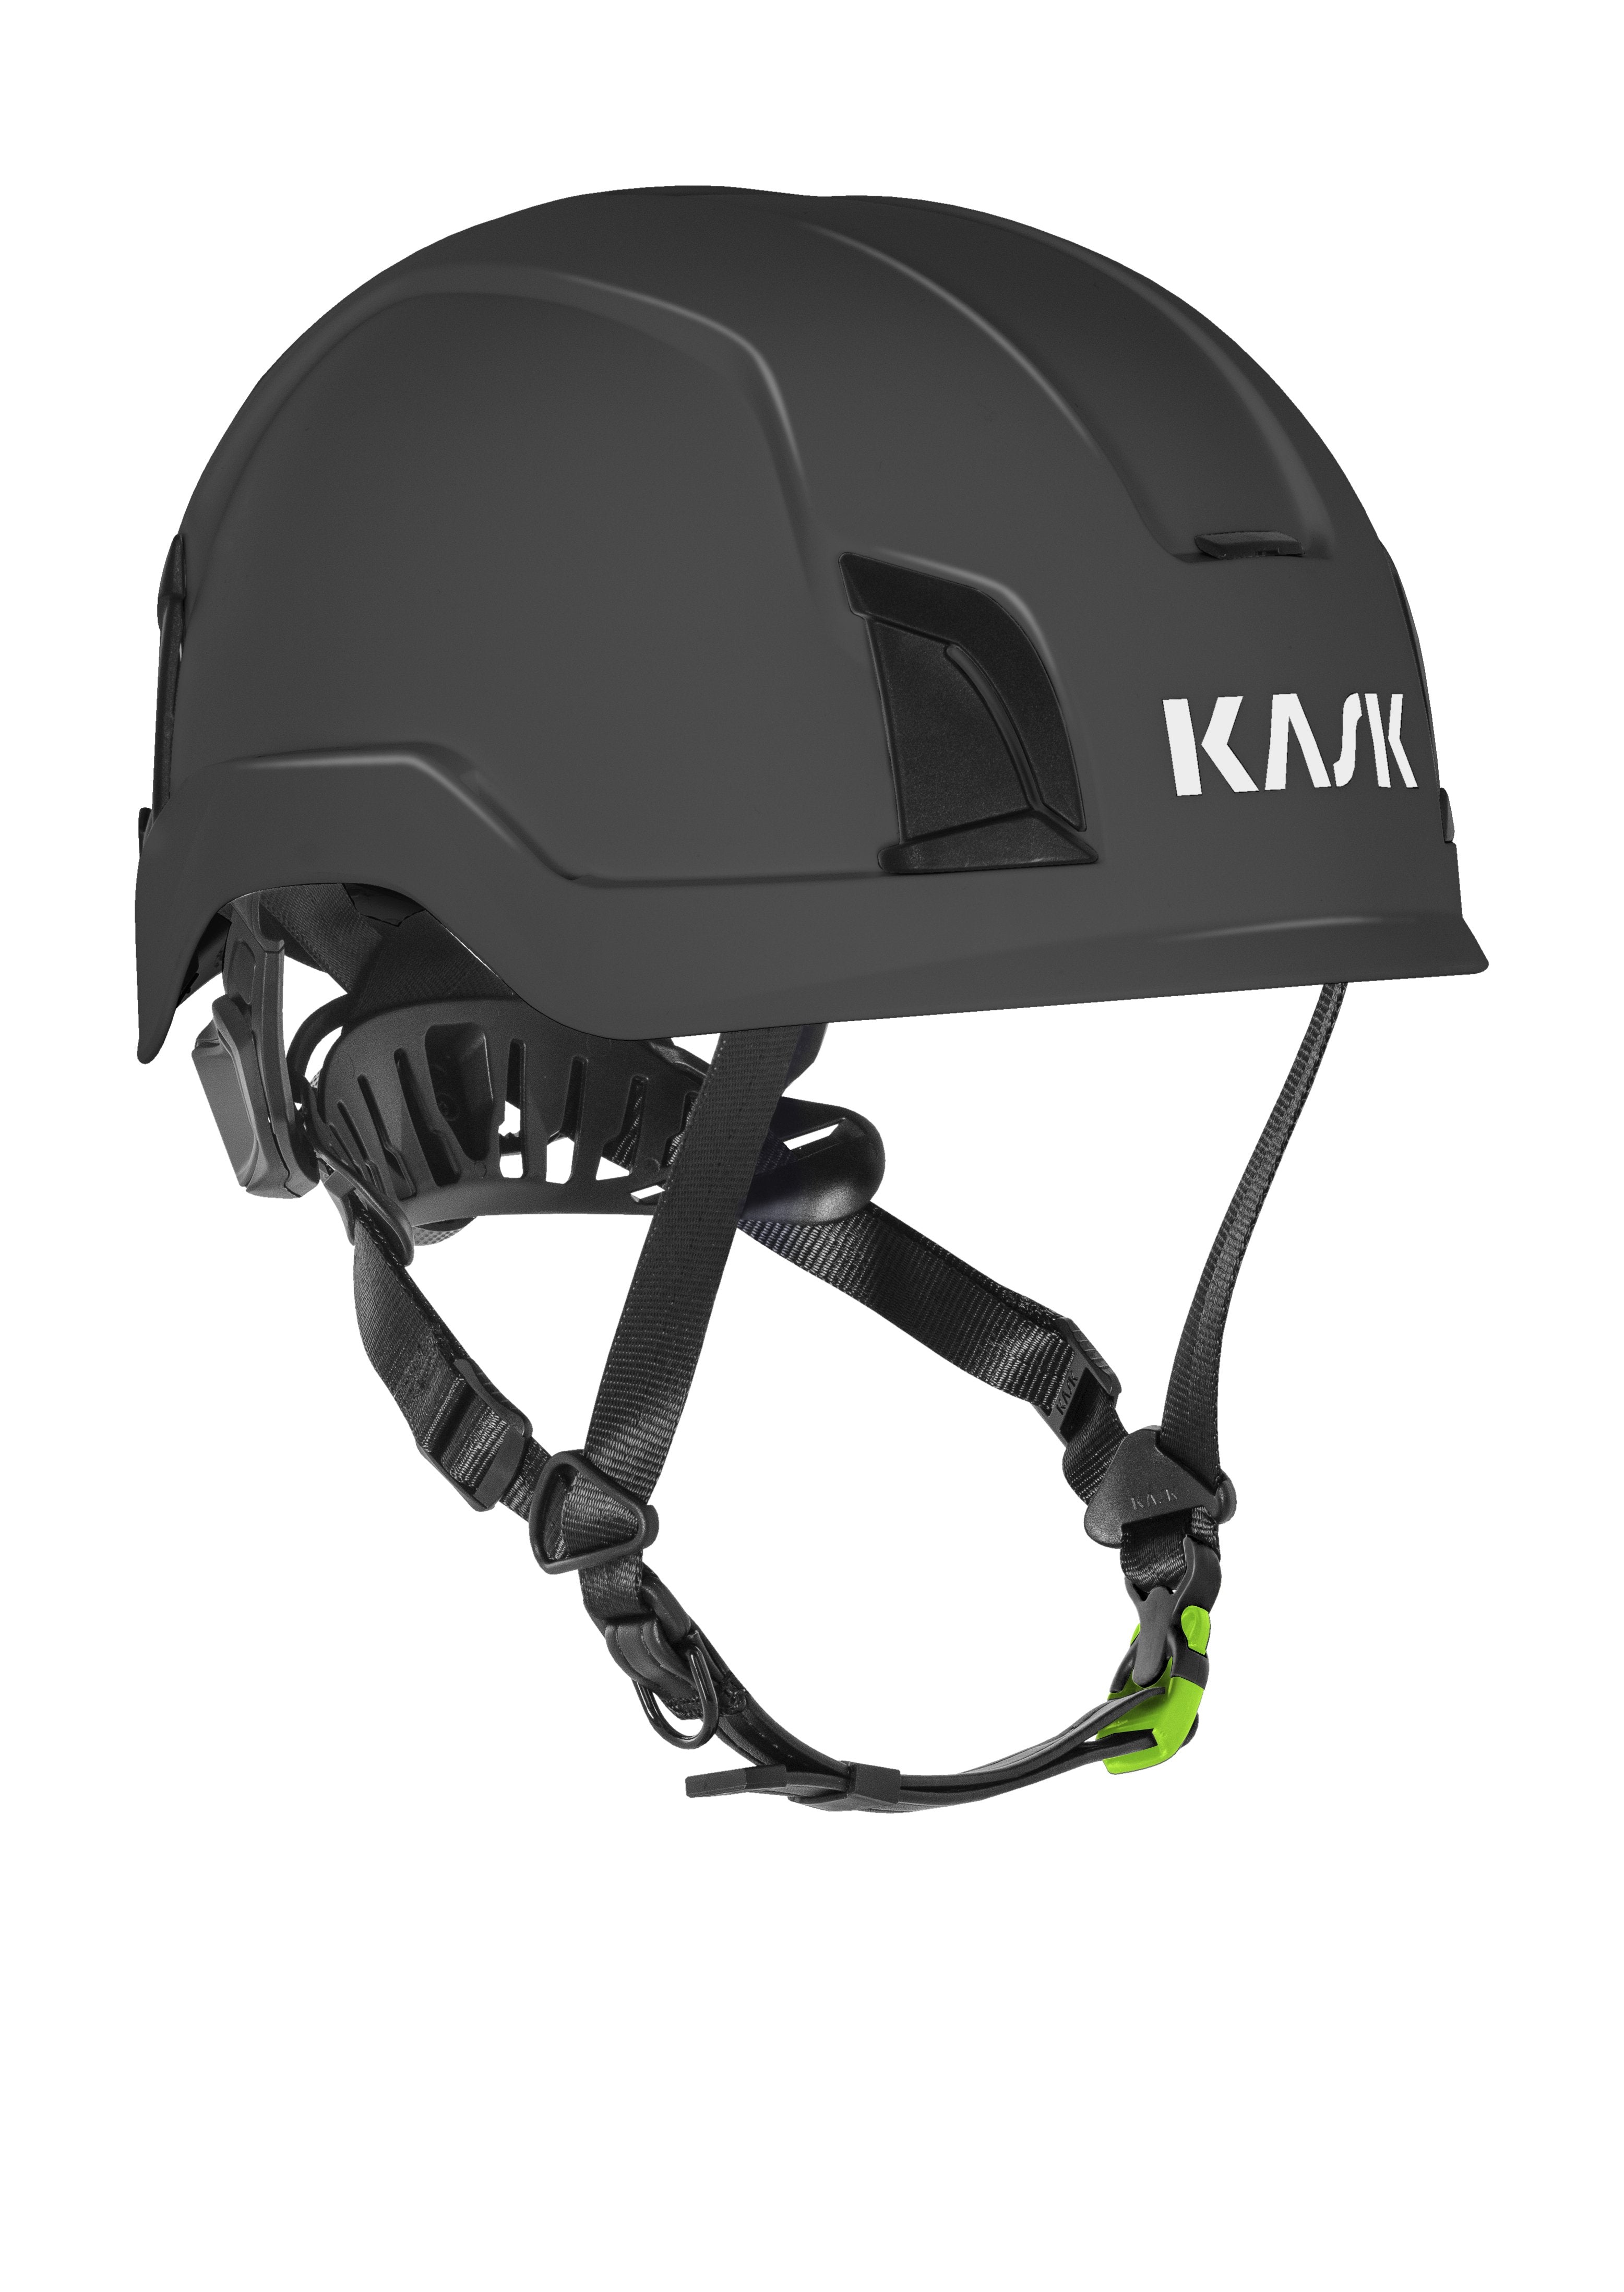 WHE00073 KASK Zenith X Helmet